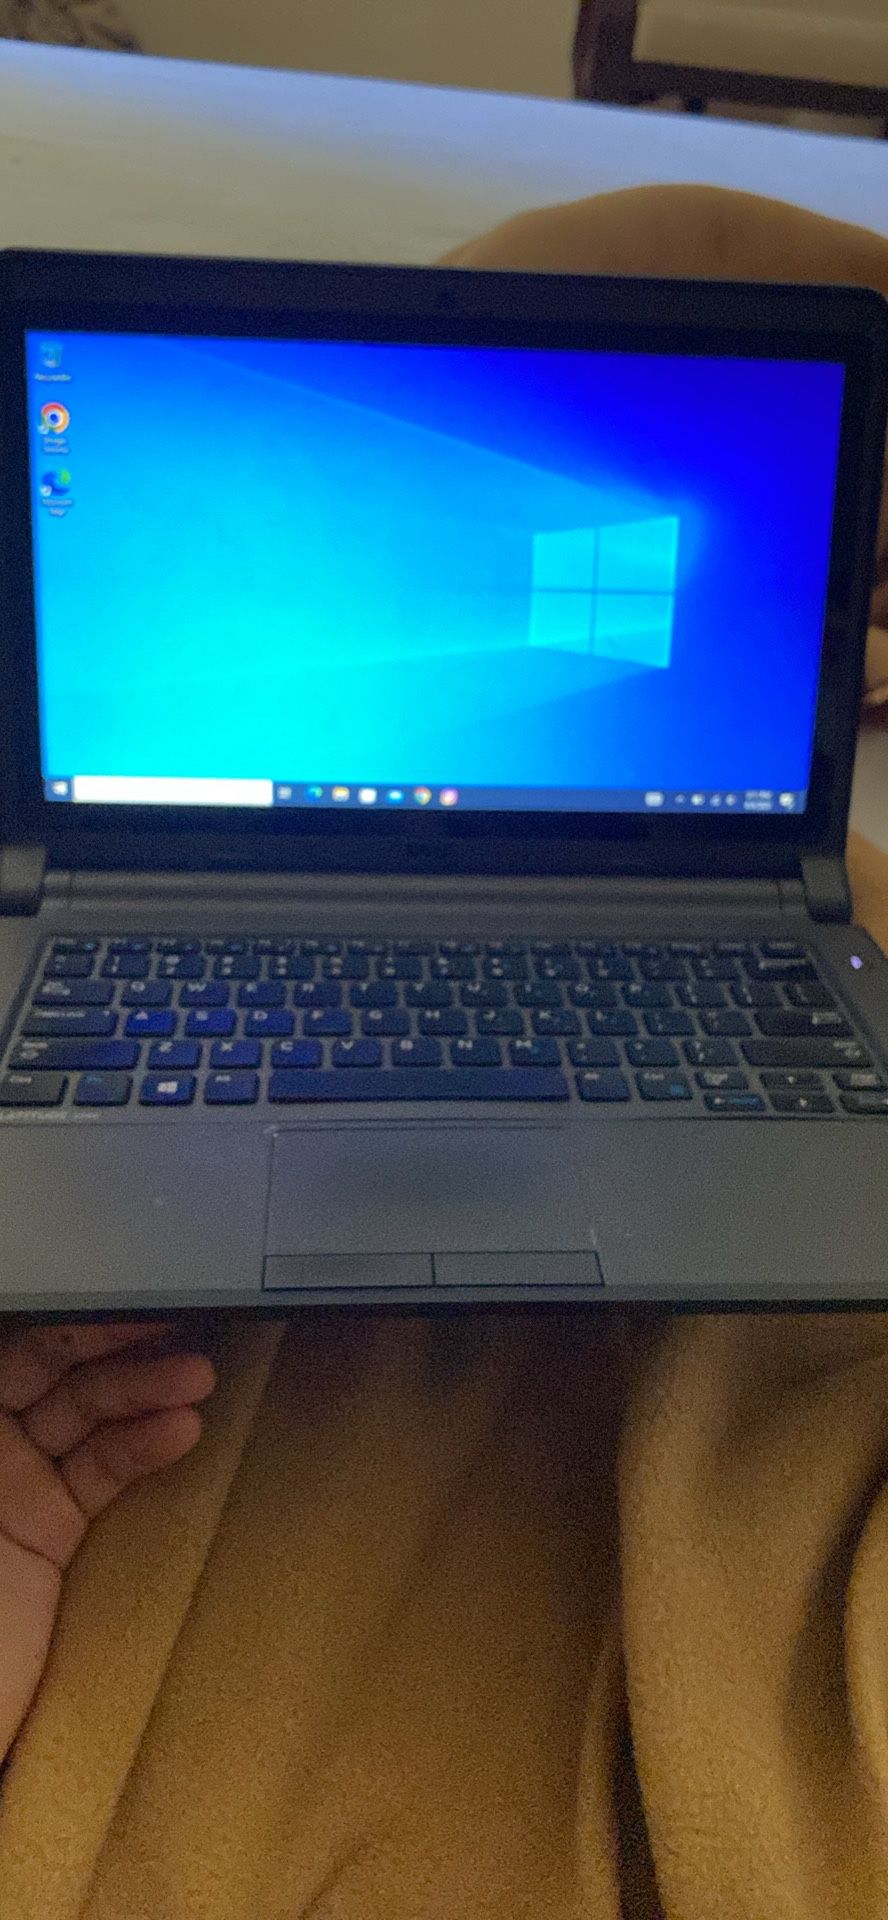 Dell Touchscreen Laptop 